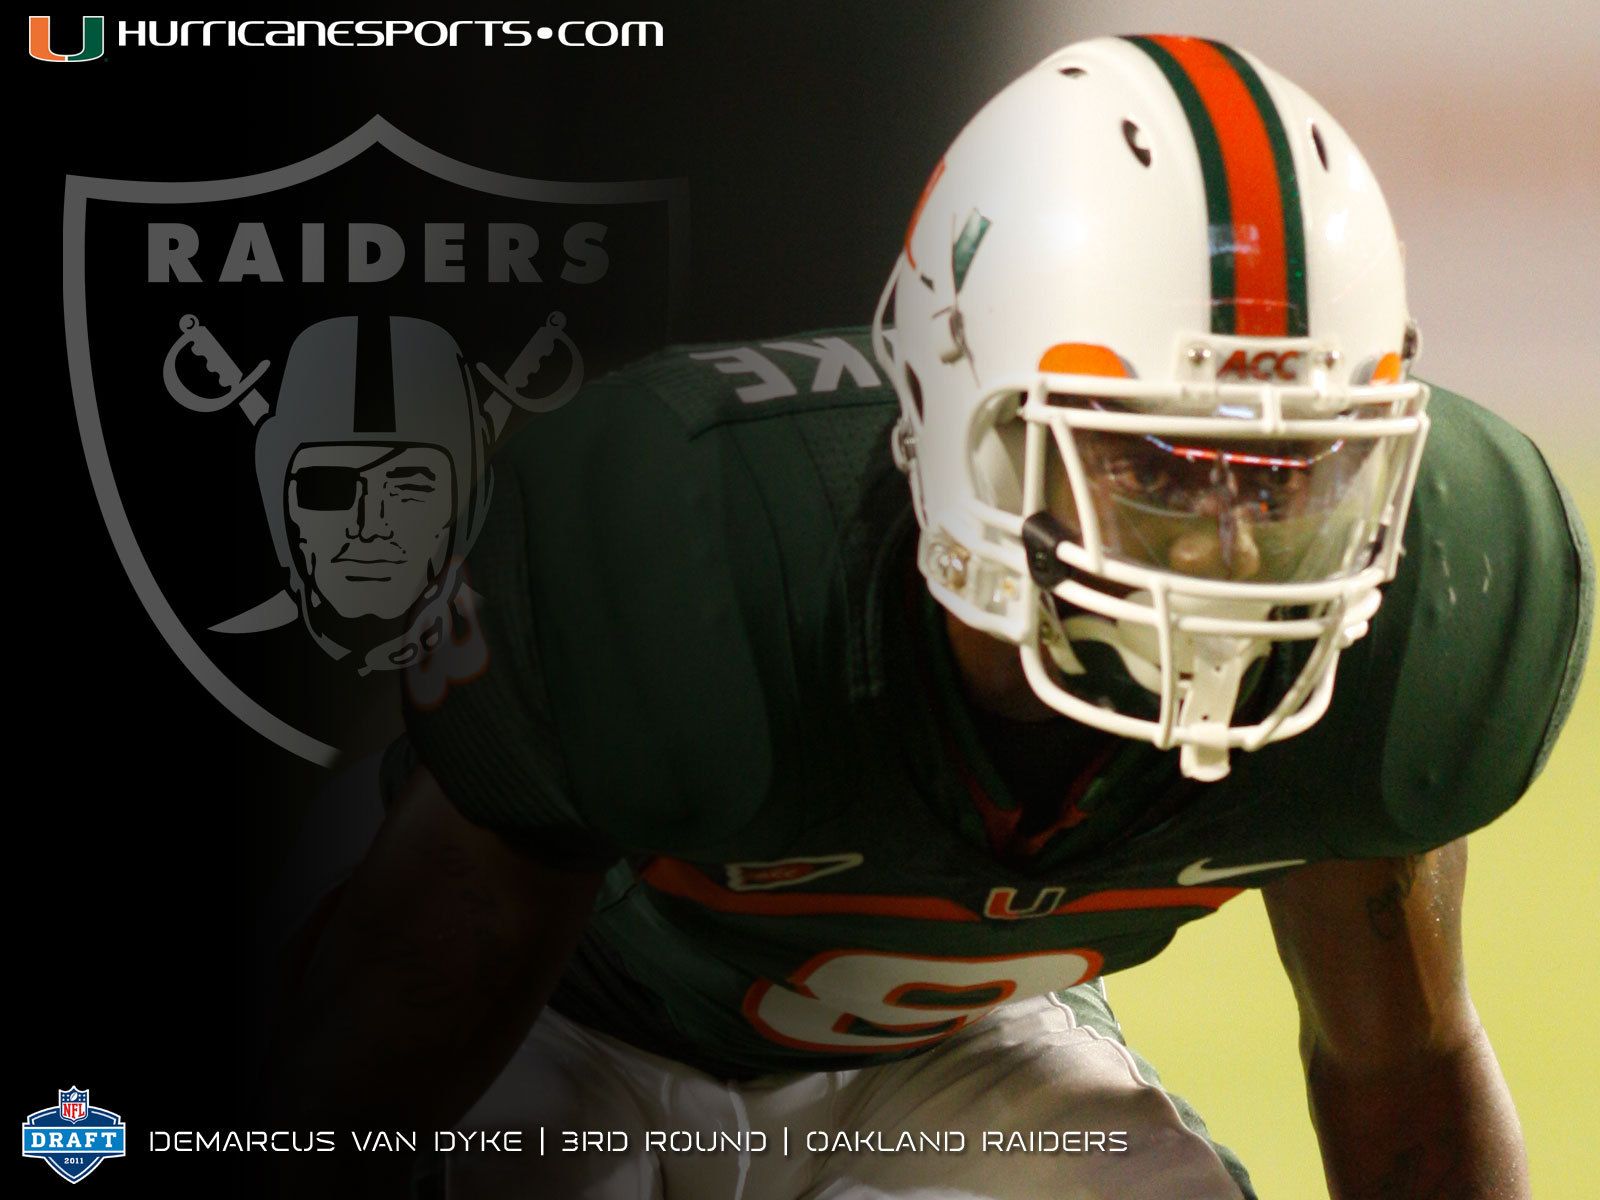 Wallpapers: Celebrate 2011 NFL Draft - University of Miami ...